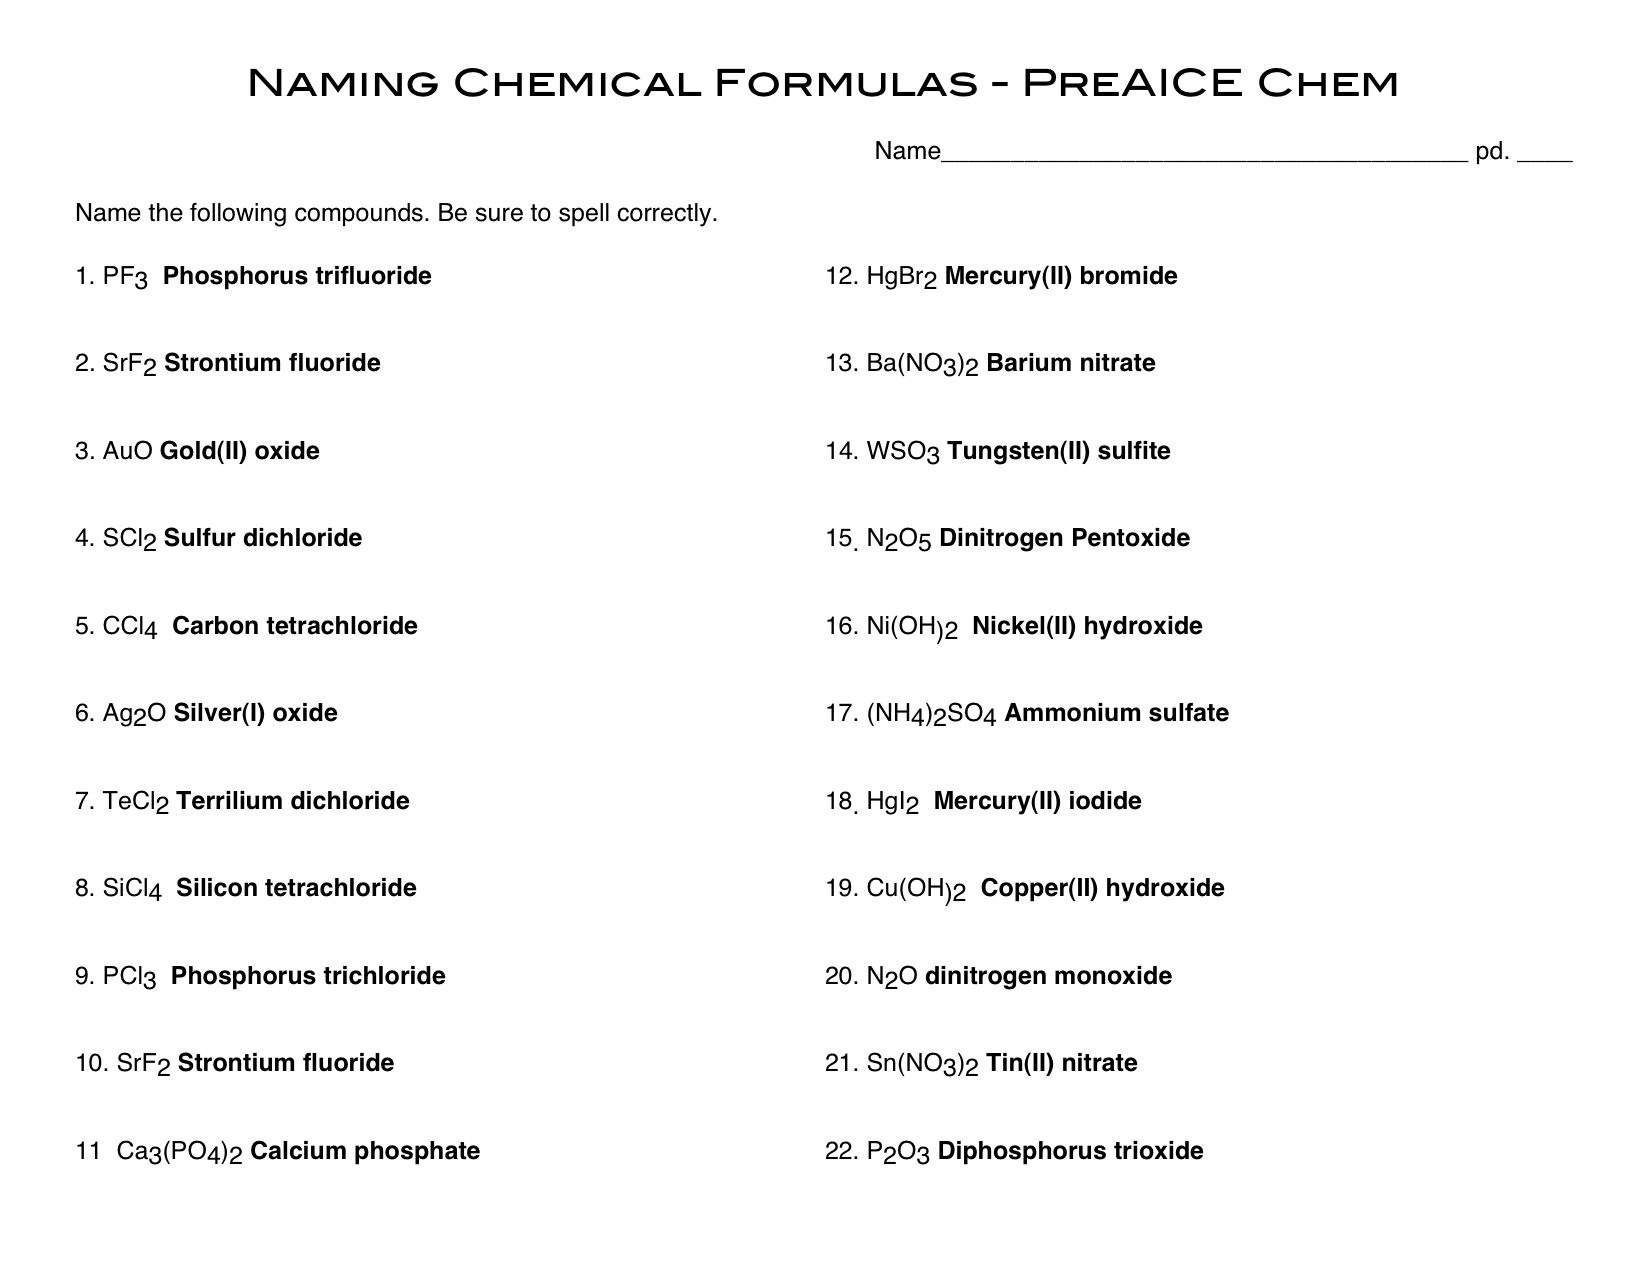 Naming Ionic Compounds Worksheet Answer Key Image